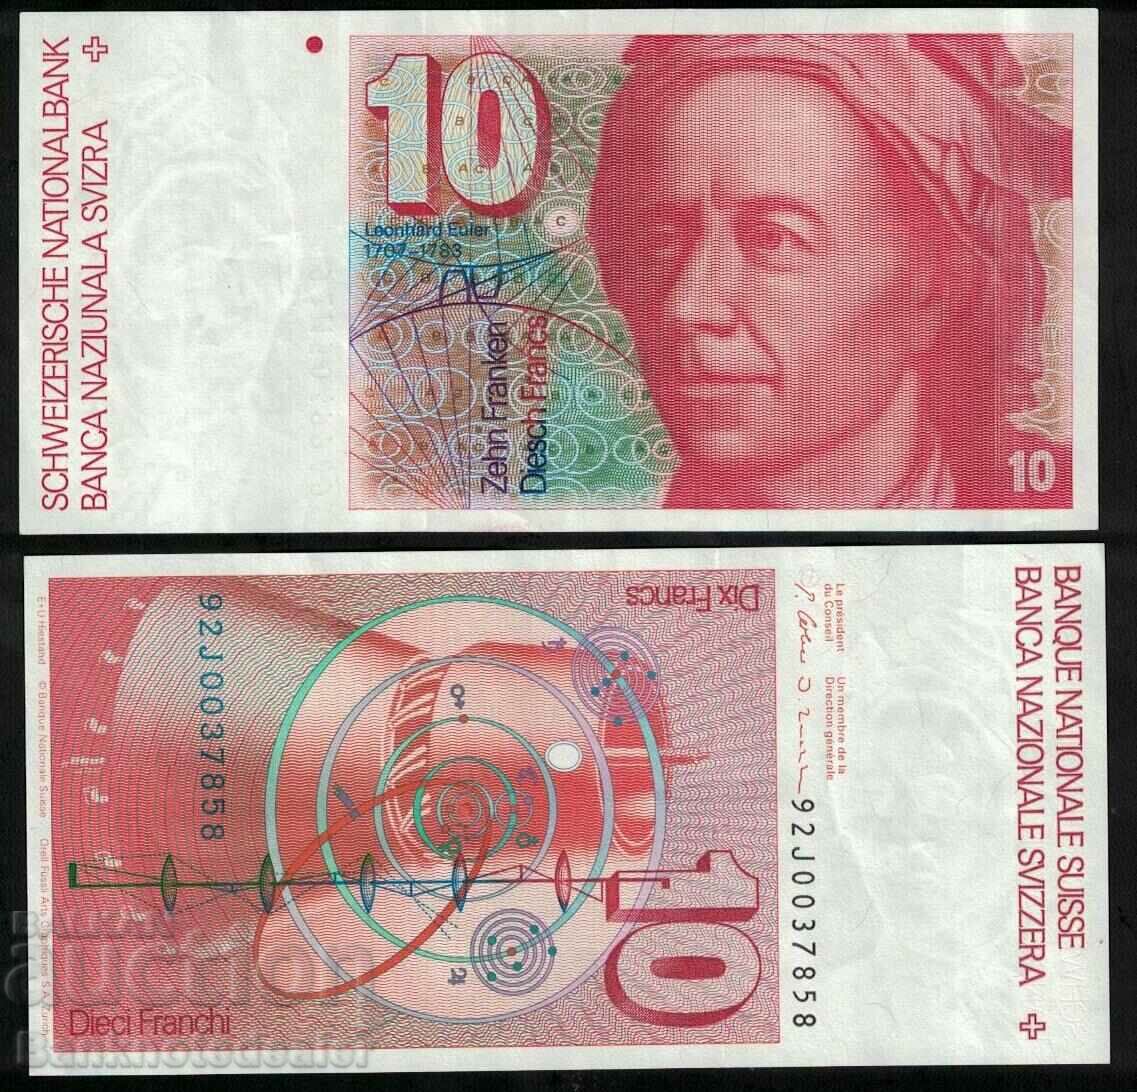 Switzerland 10 Francs 1976 Pick 53 Ref 7058